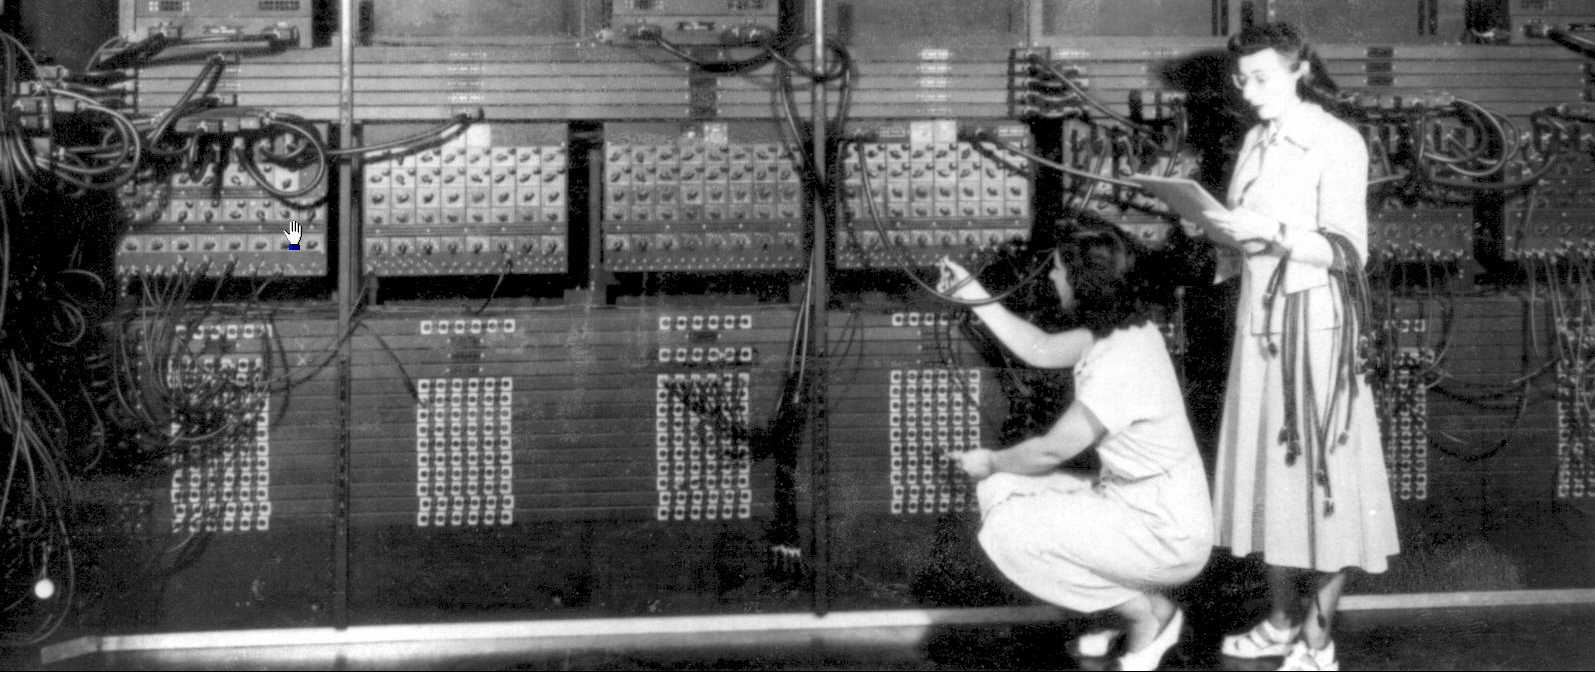 eniac computer 1946